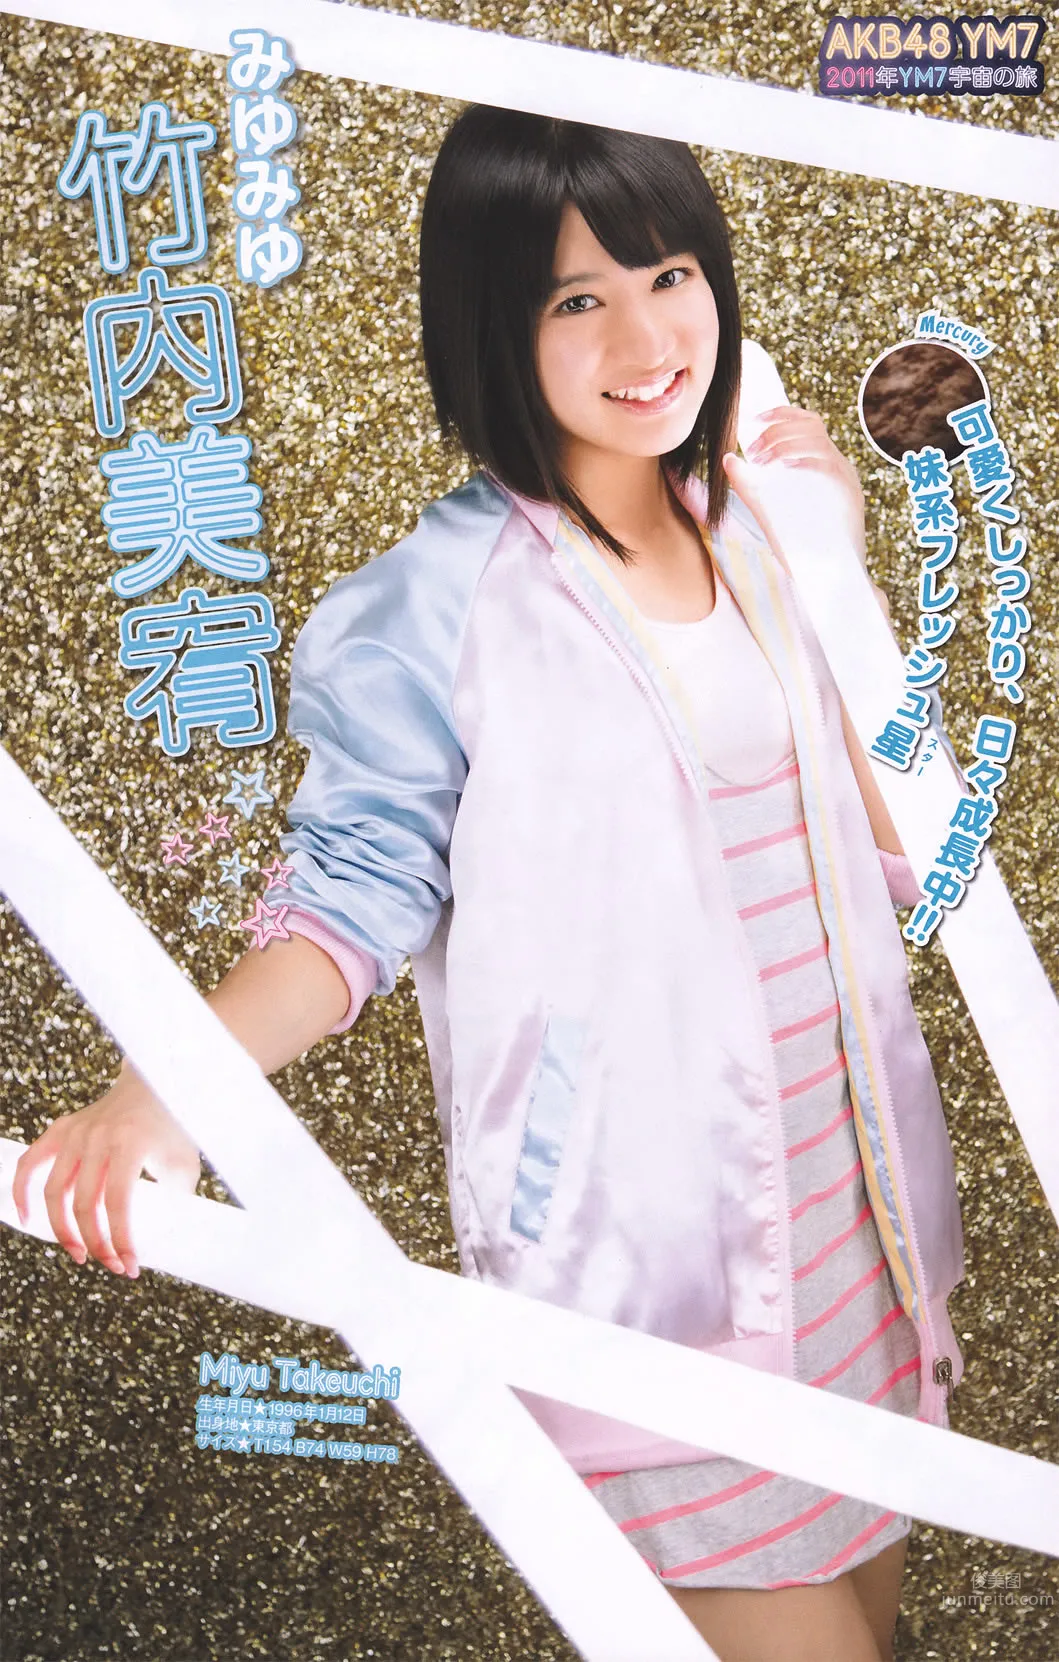 [Young Magazine] 2011 No.18 AKB48YM7 NMB48 吉木りさ_11